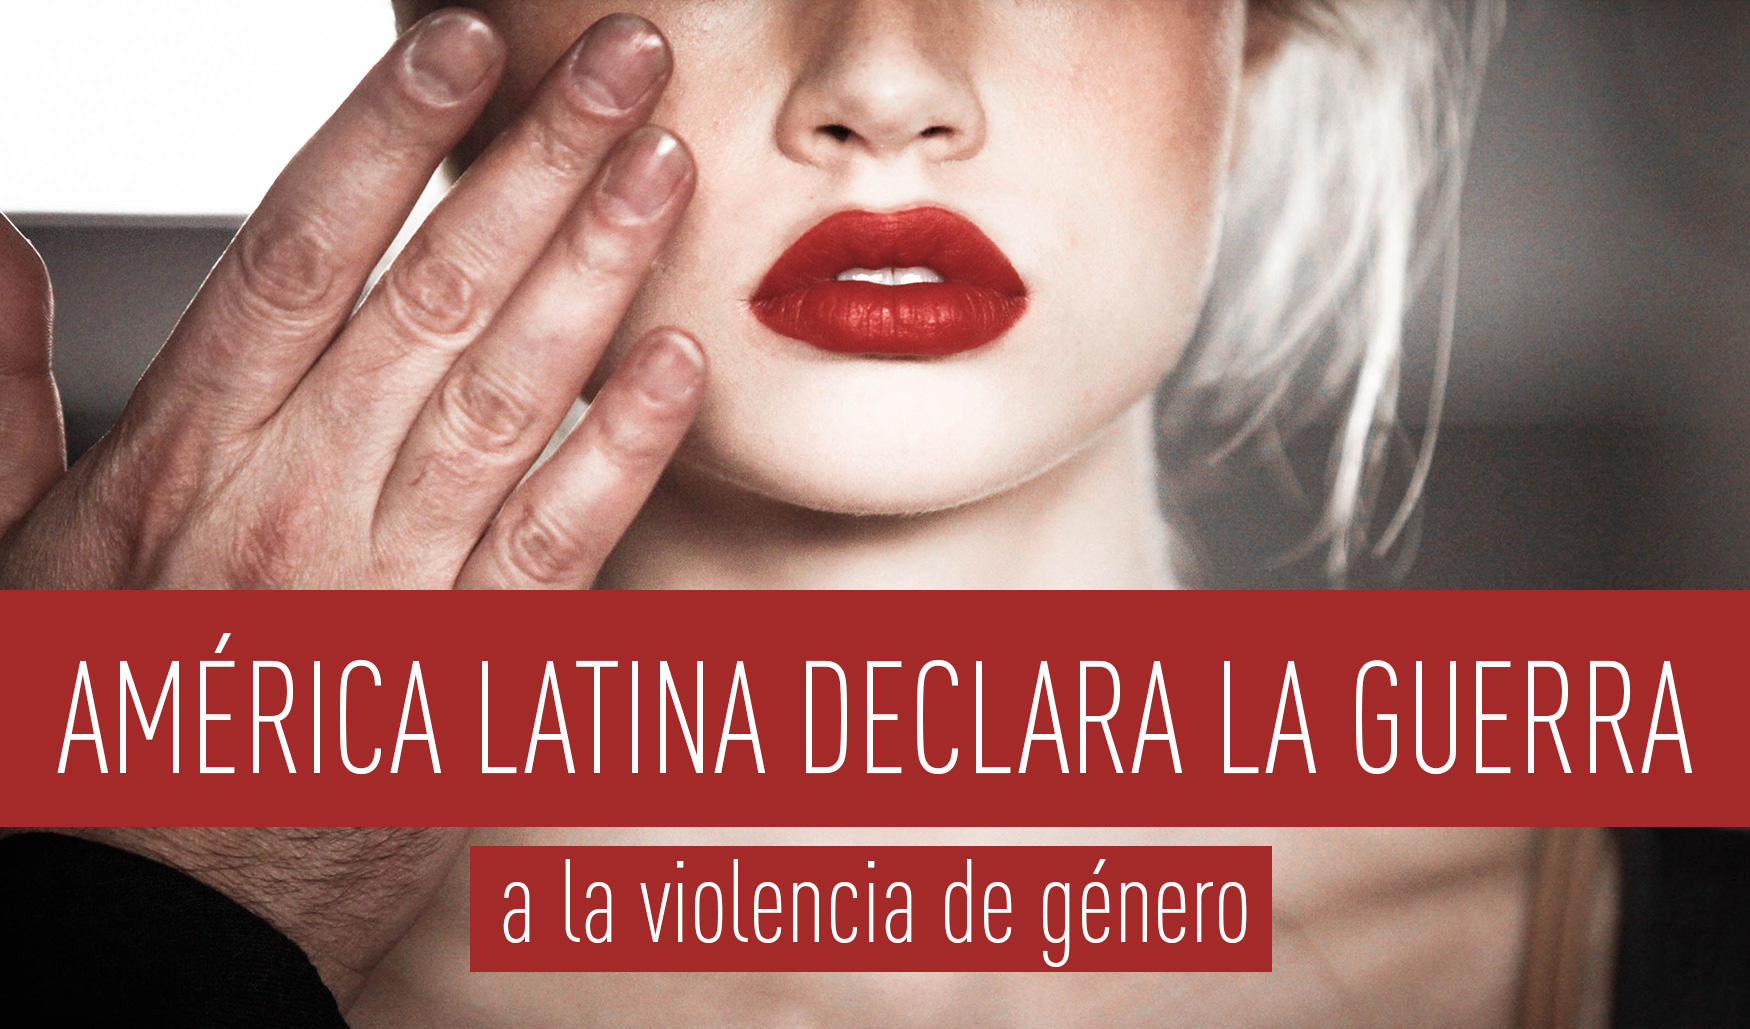 América Latina declara la guerra a la violencia de género